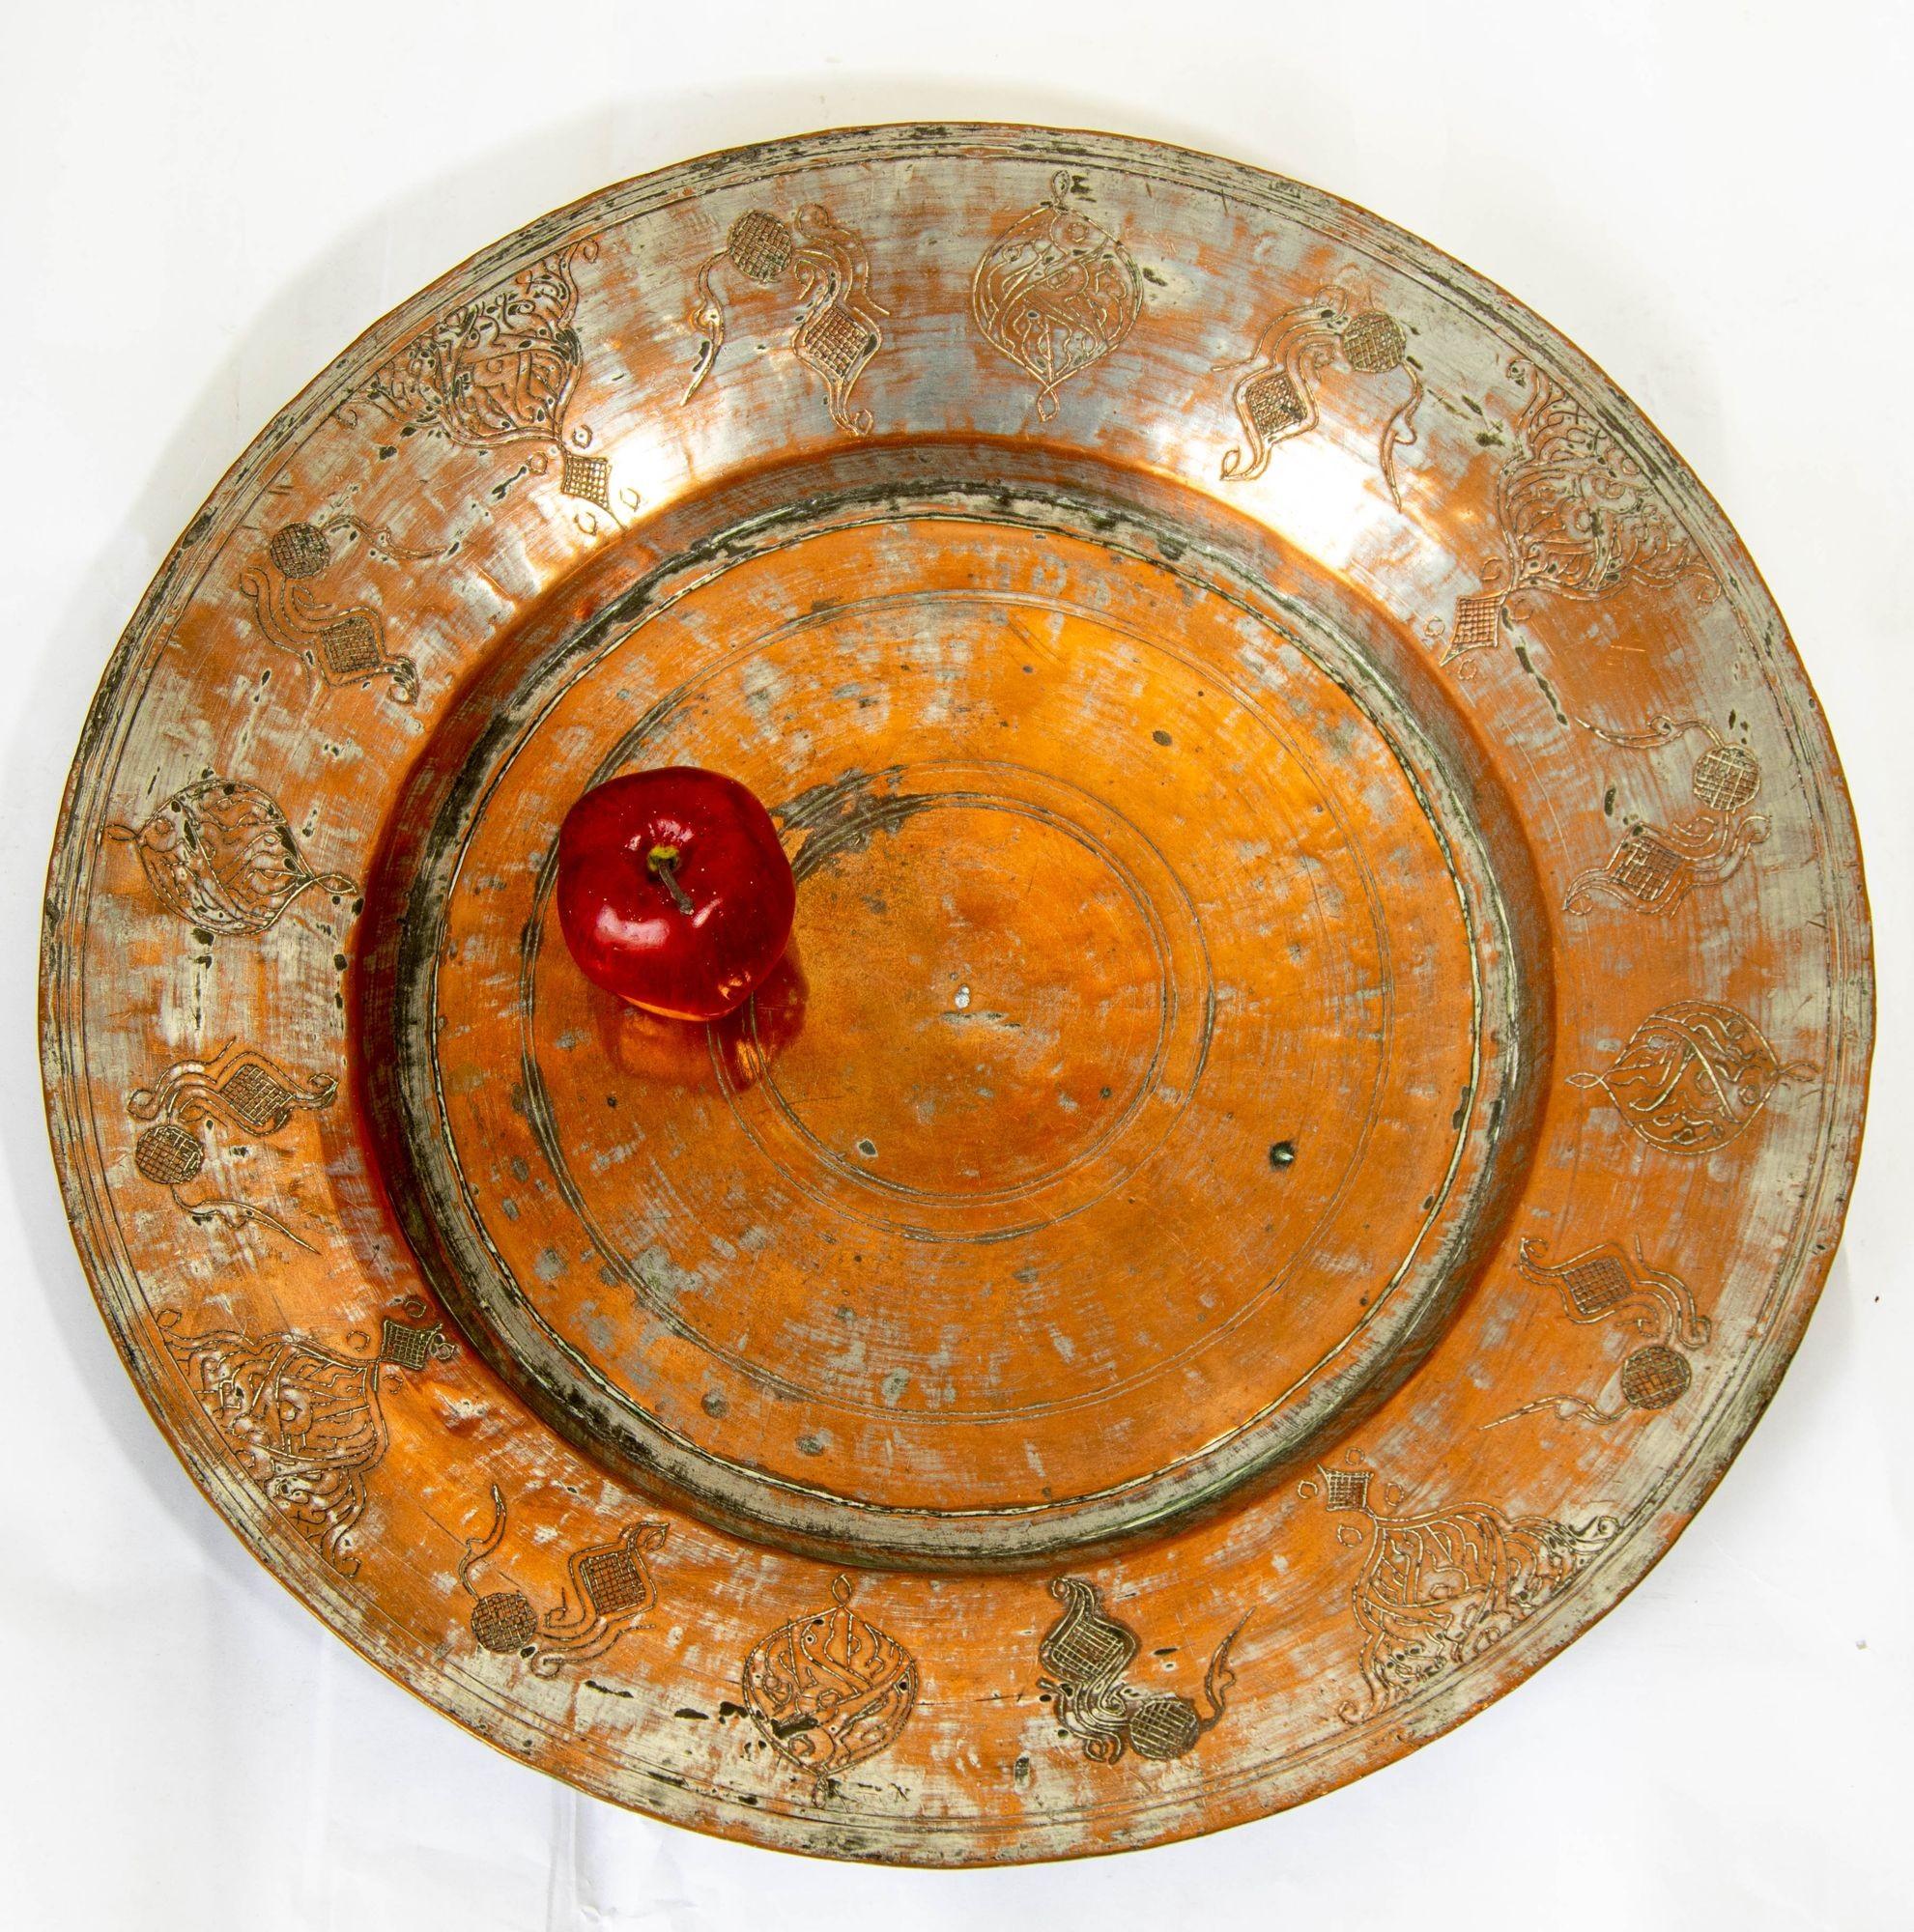 Islamic Antique Turkish Ottoman Tinned Copper Vessel Large Metal Bowl